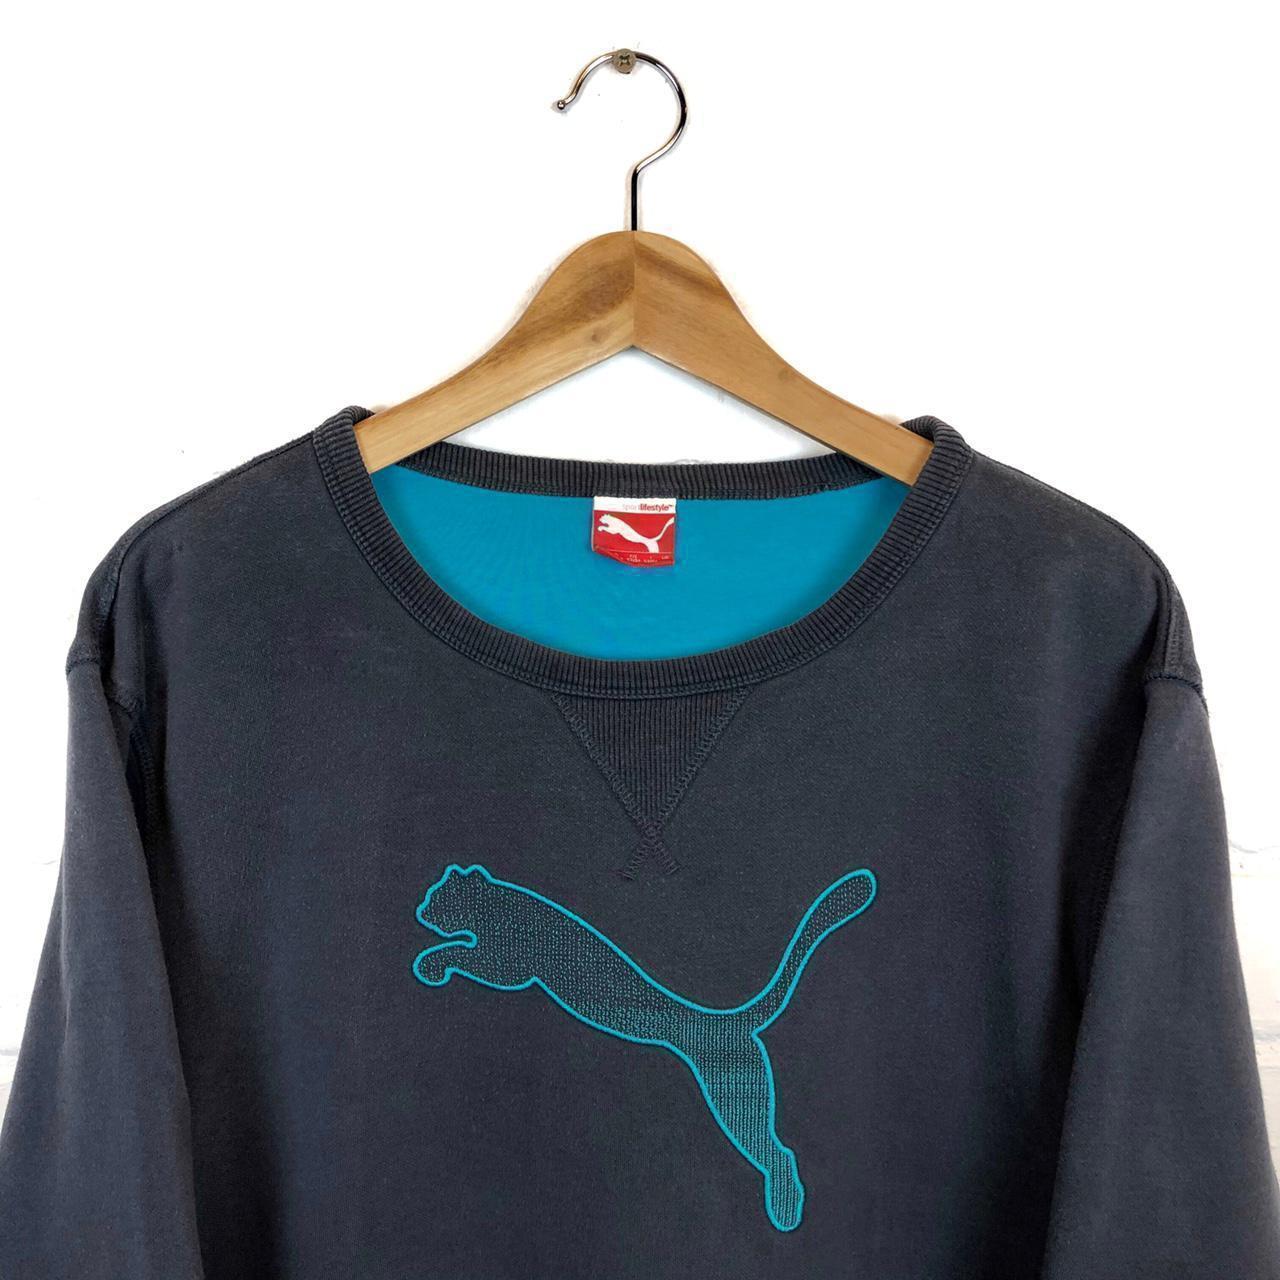 Puma sweatshirt embroidered spellout logo l Navy... - Depop